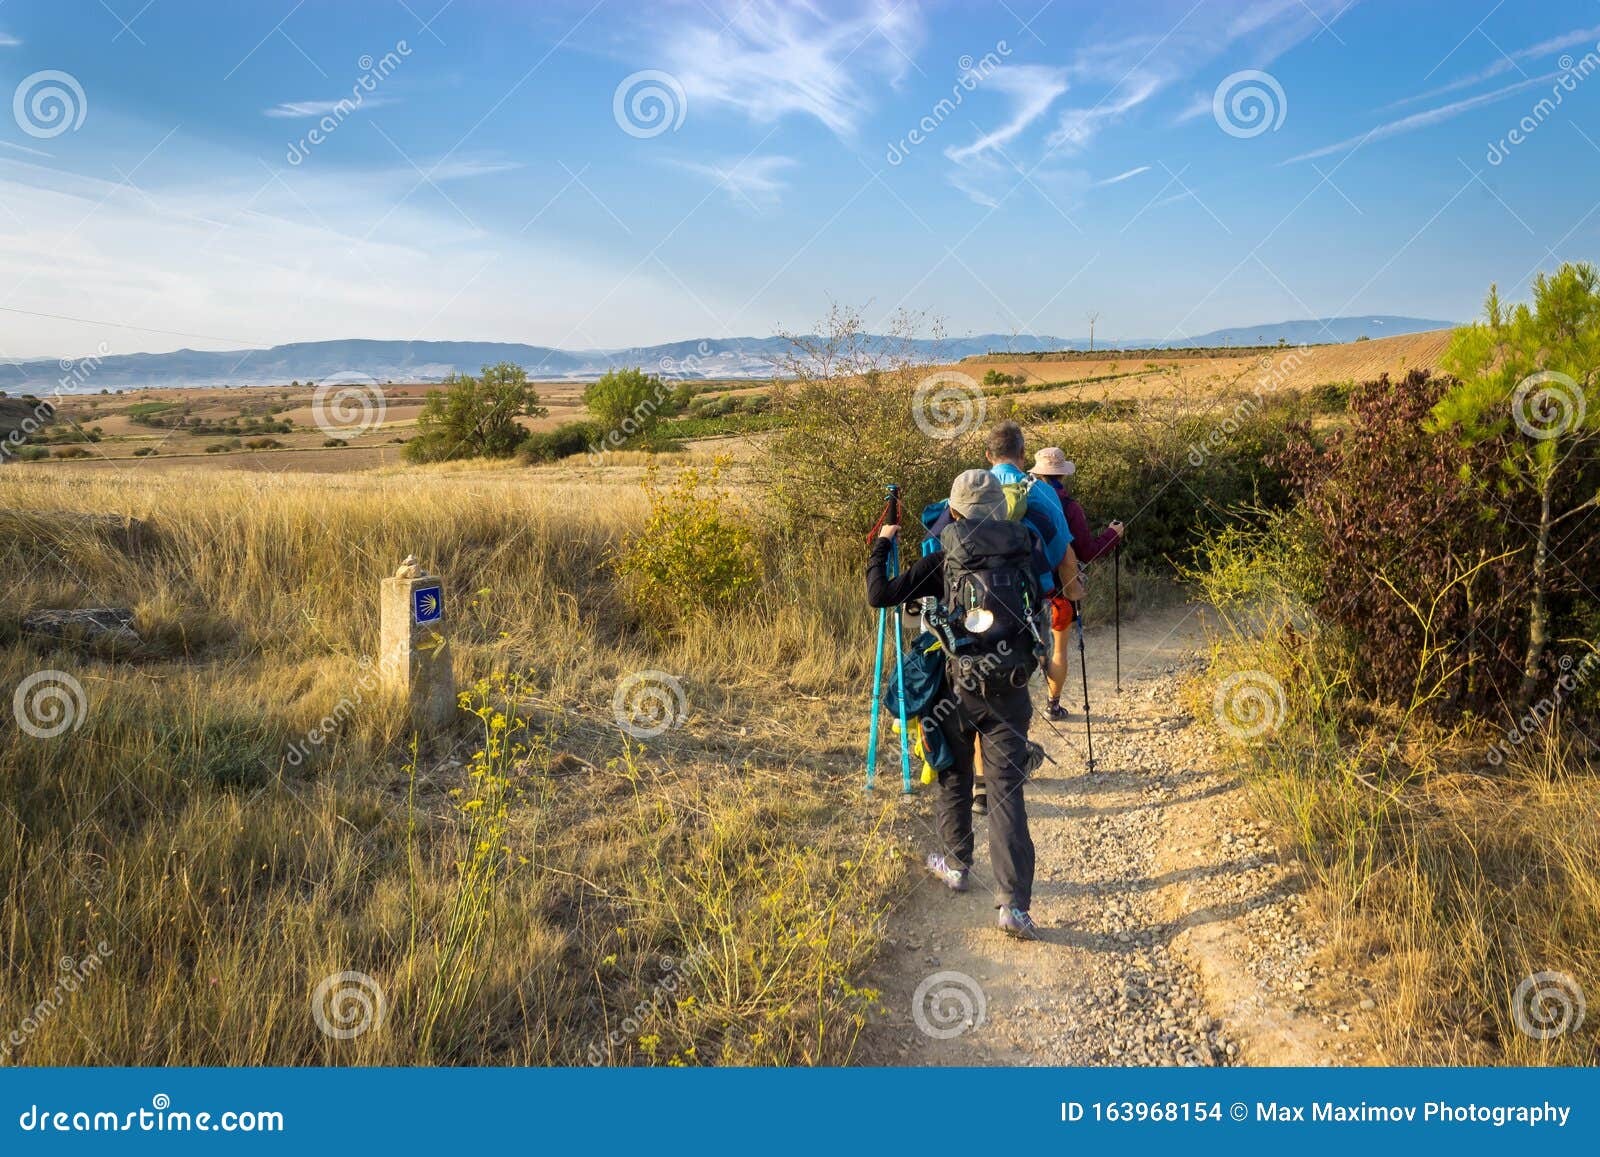 camino de santiago, spain - pilgrims hiking through countryside past a waymark post along the way of st james camino de santiago